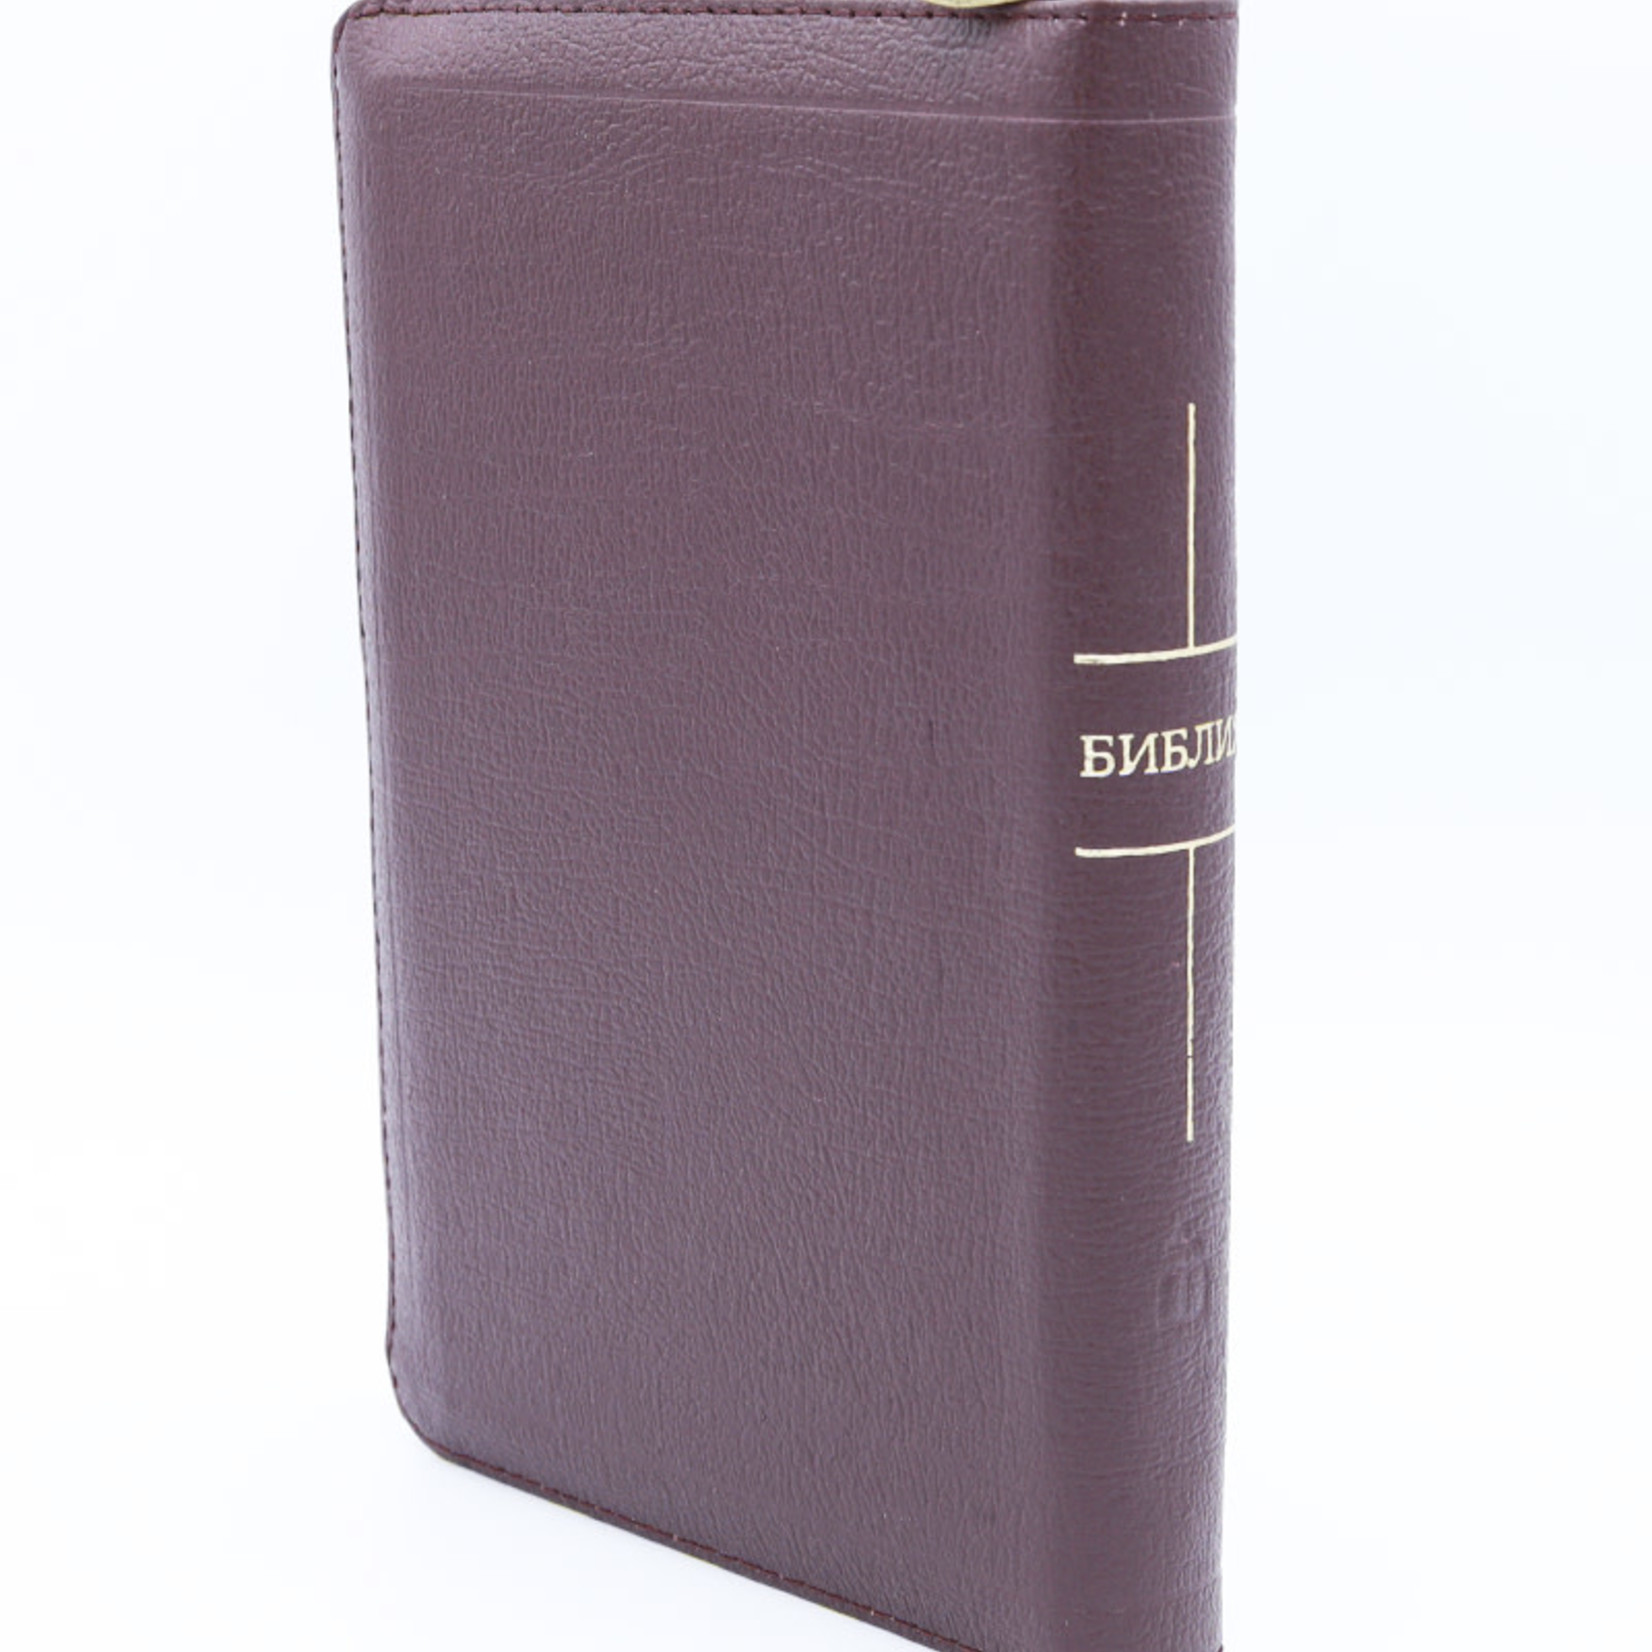 Библия, Каноническая (SYNO), Index, Leather with Zipper, Small Burgundy